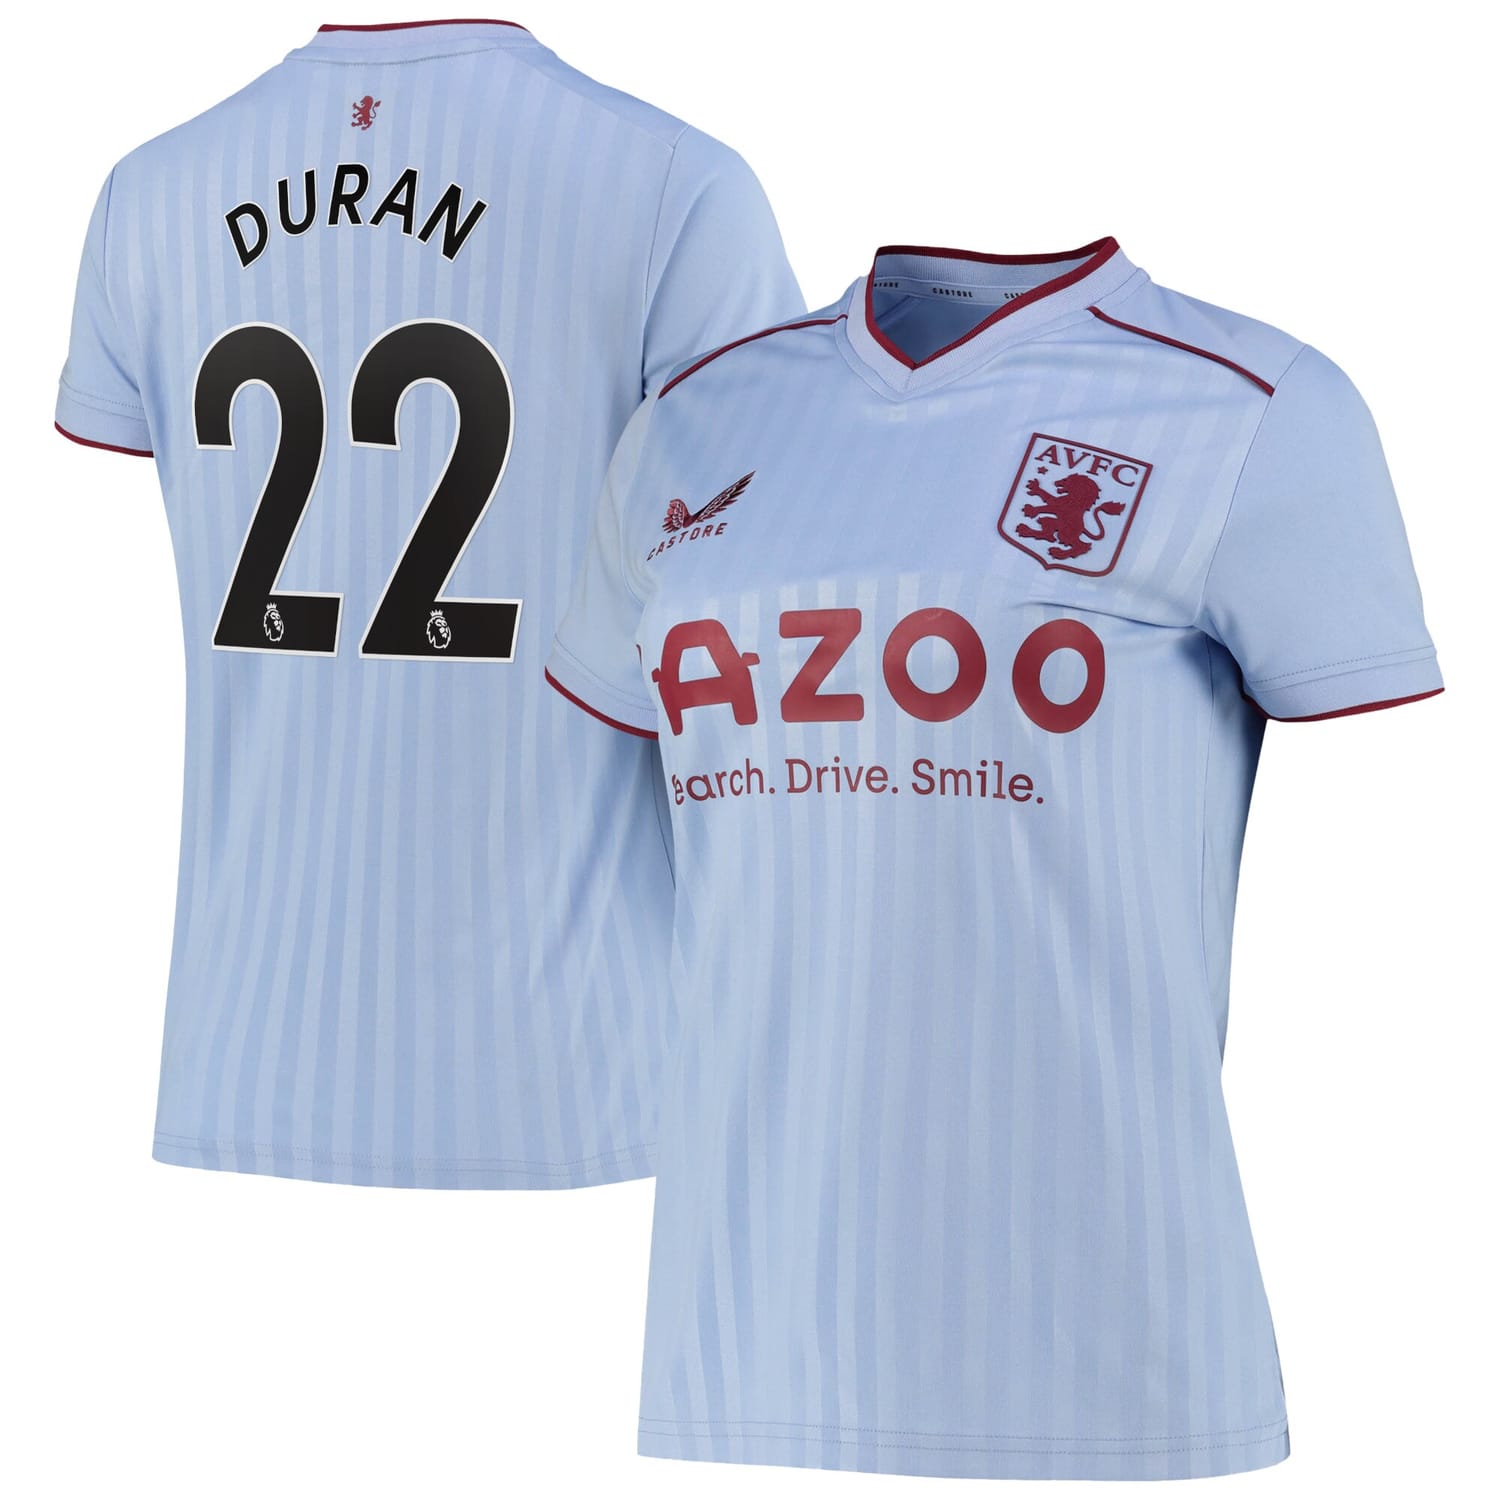 Premier League Aston Villa Away Jersey Shirt 2022-23 player Duran 22 printing for Women